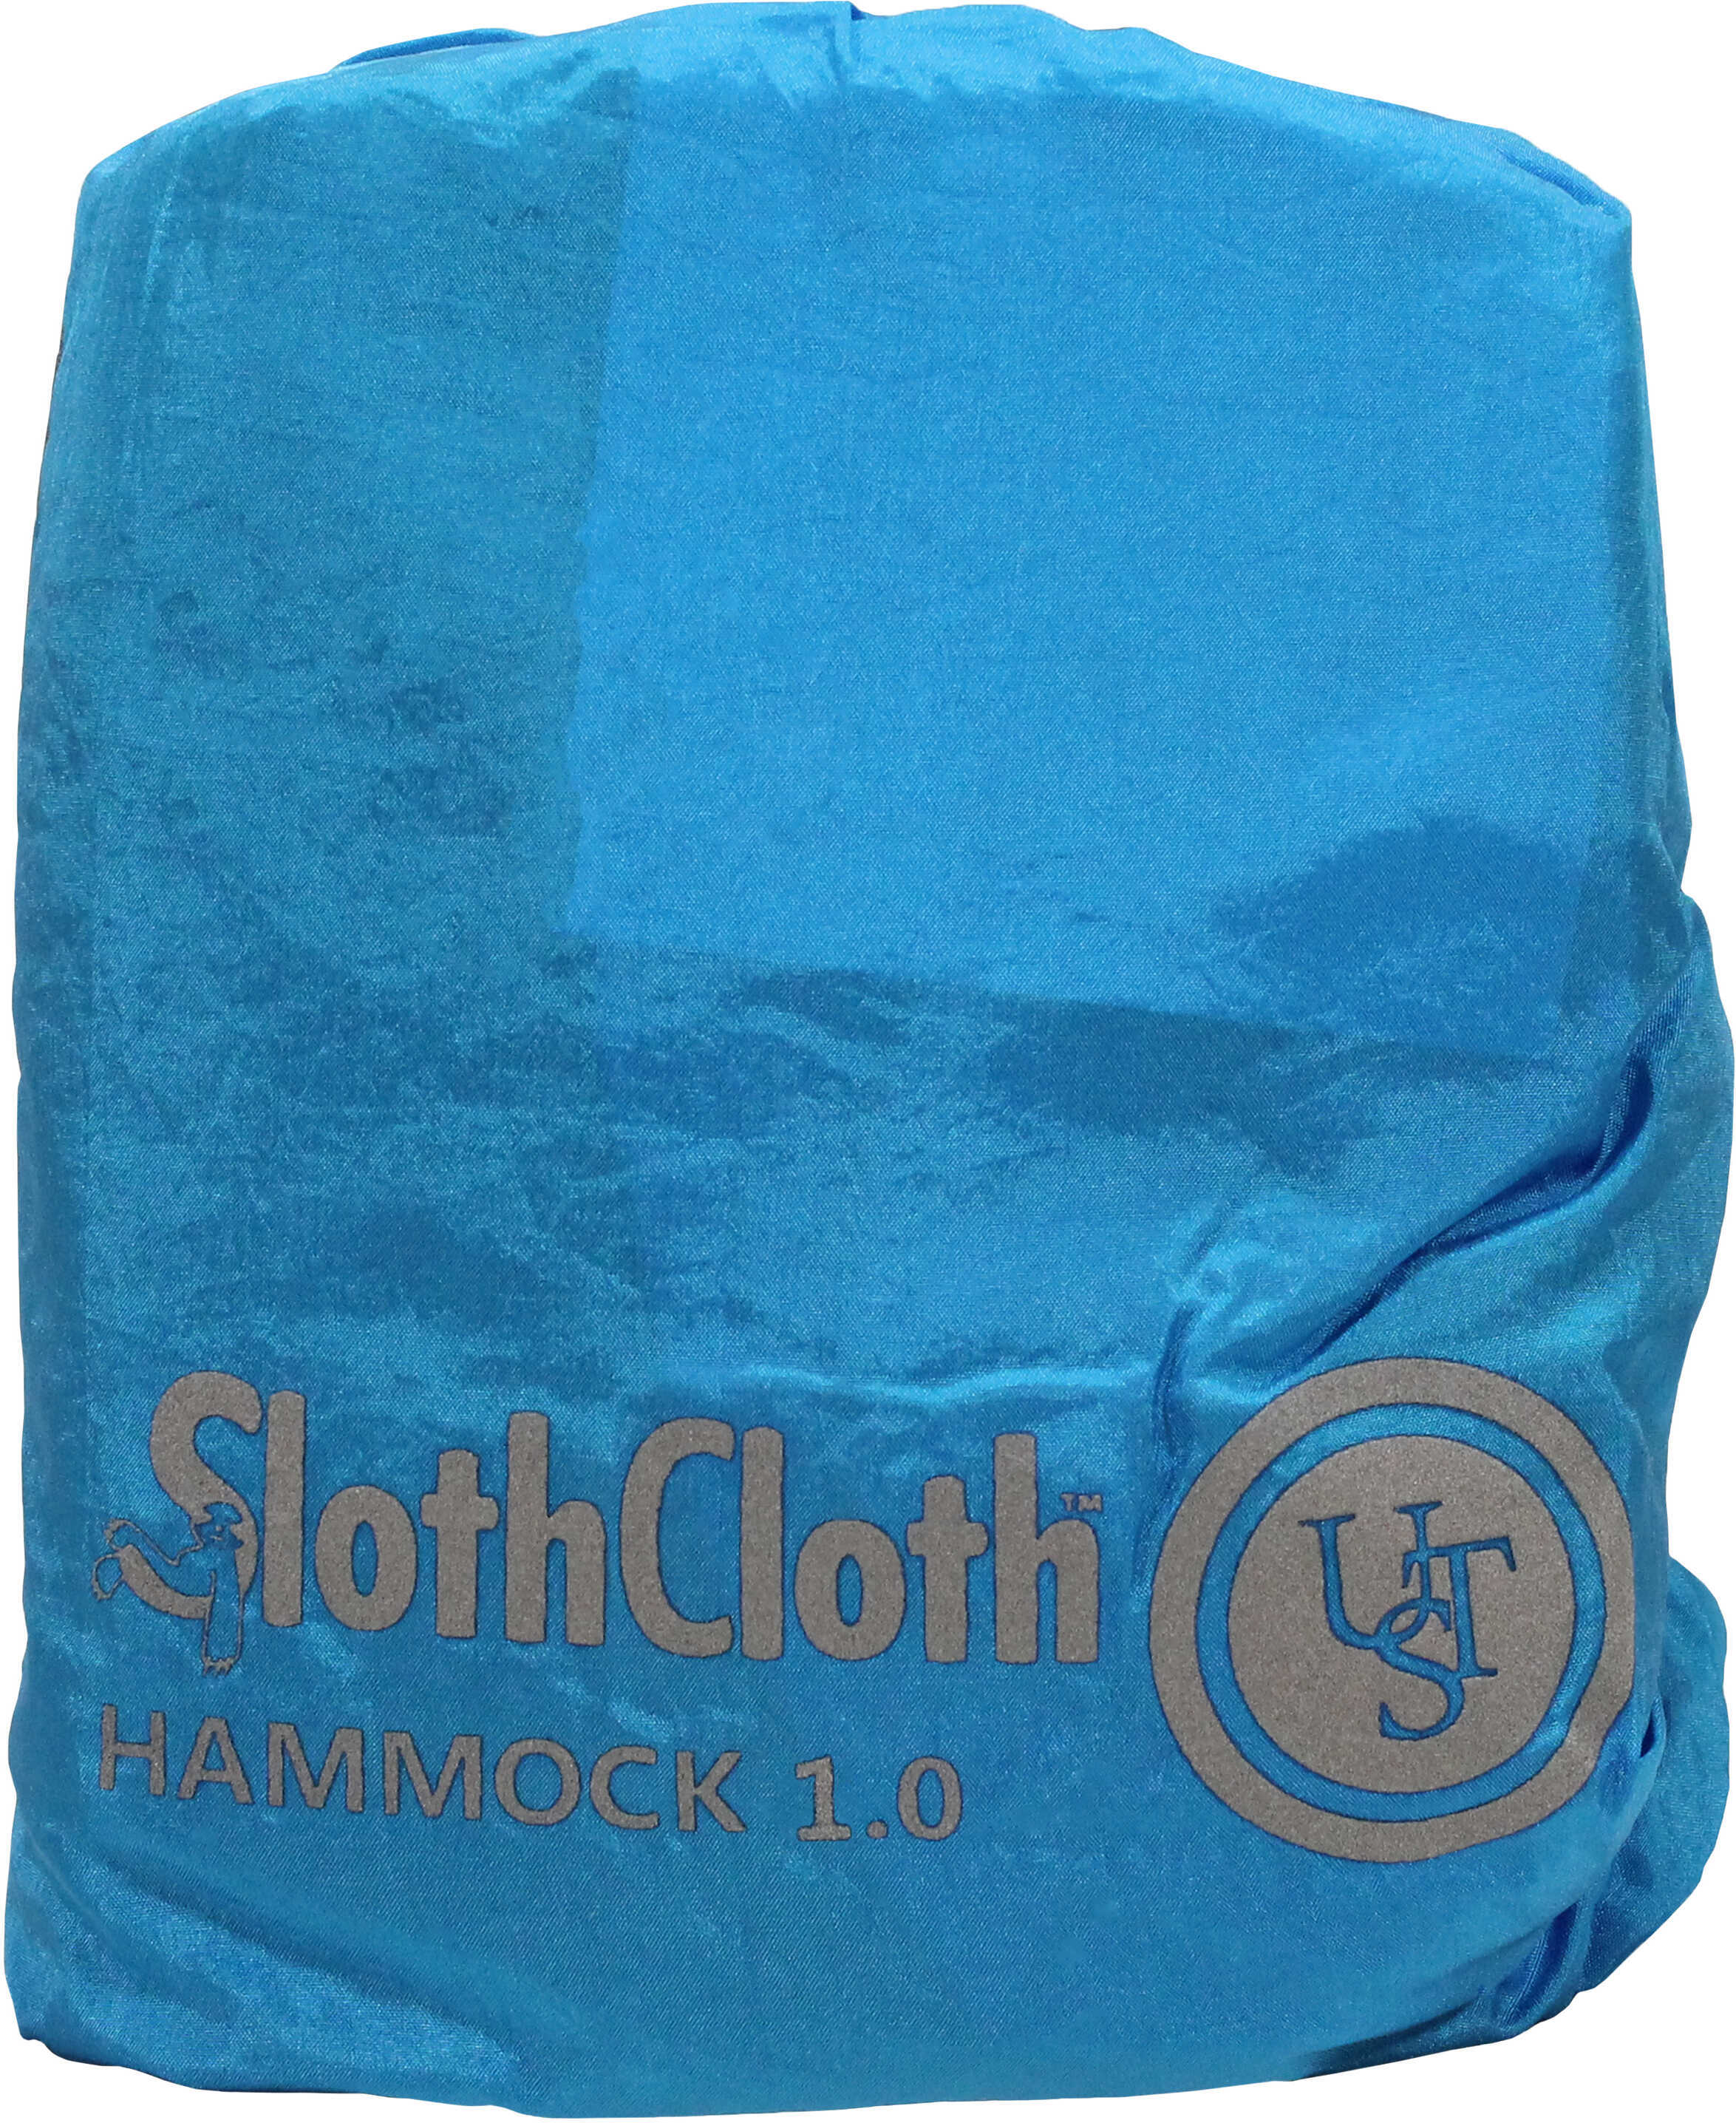 Ultimate Survival Technologies SlothCloth Hammock 1.0, Blue/Gray Md: 20-12156